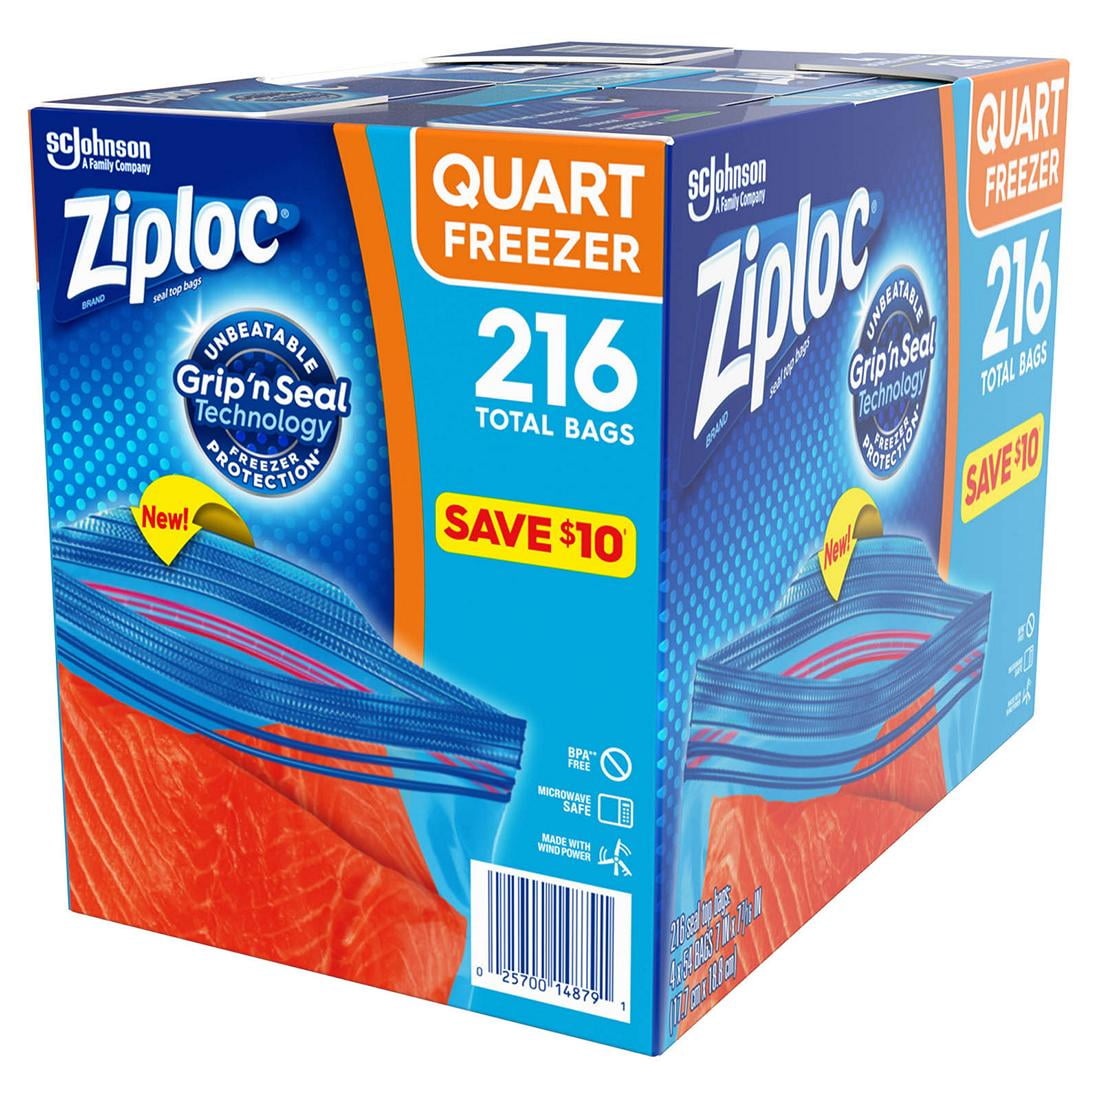 Ziploc Double Zipper Quart Freezer Bags, 216 Ct 